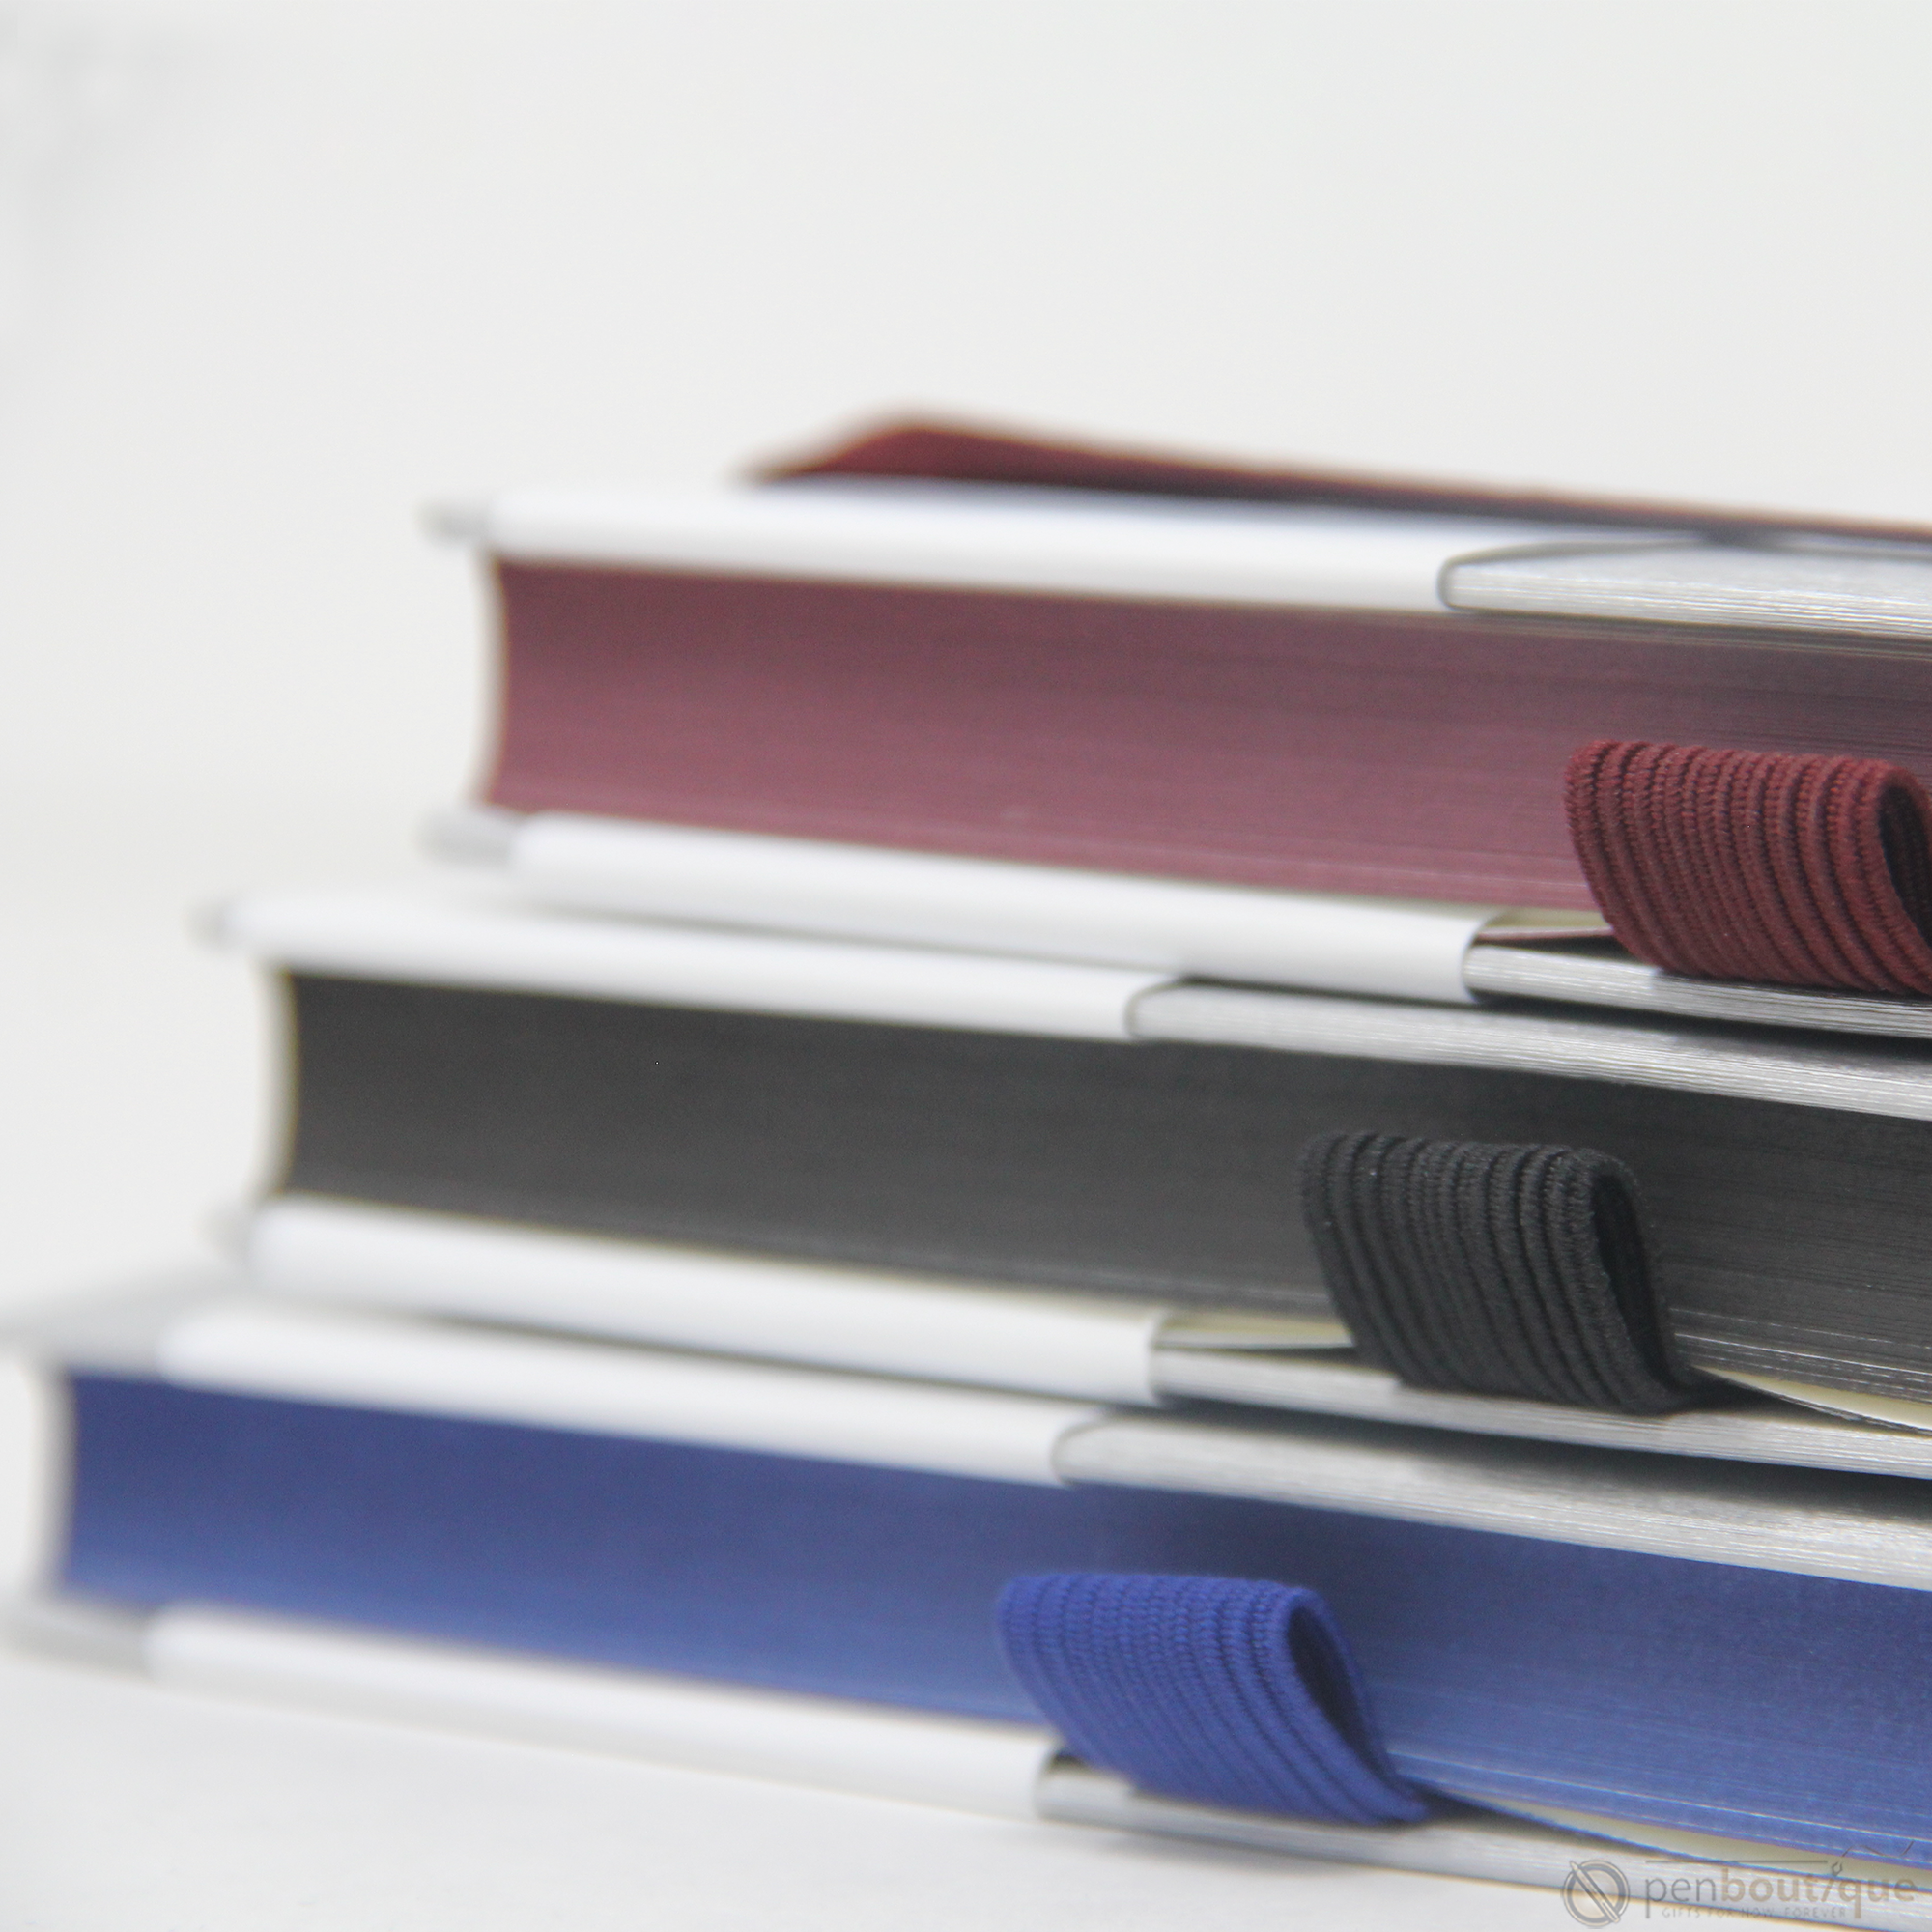 Lamy Notebook - Hard Ocean Blue - A5-Pen Boutique Ltd